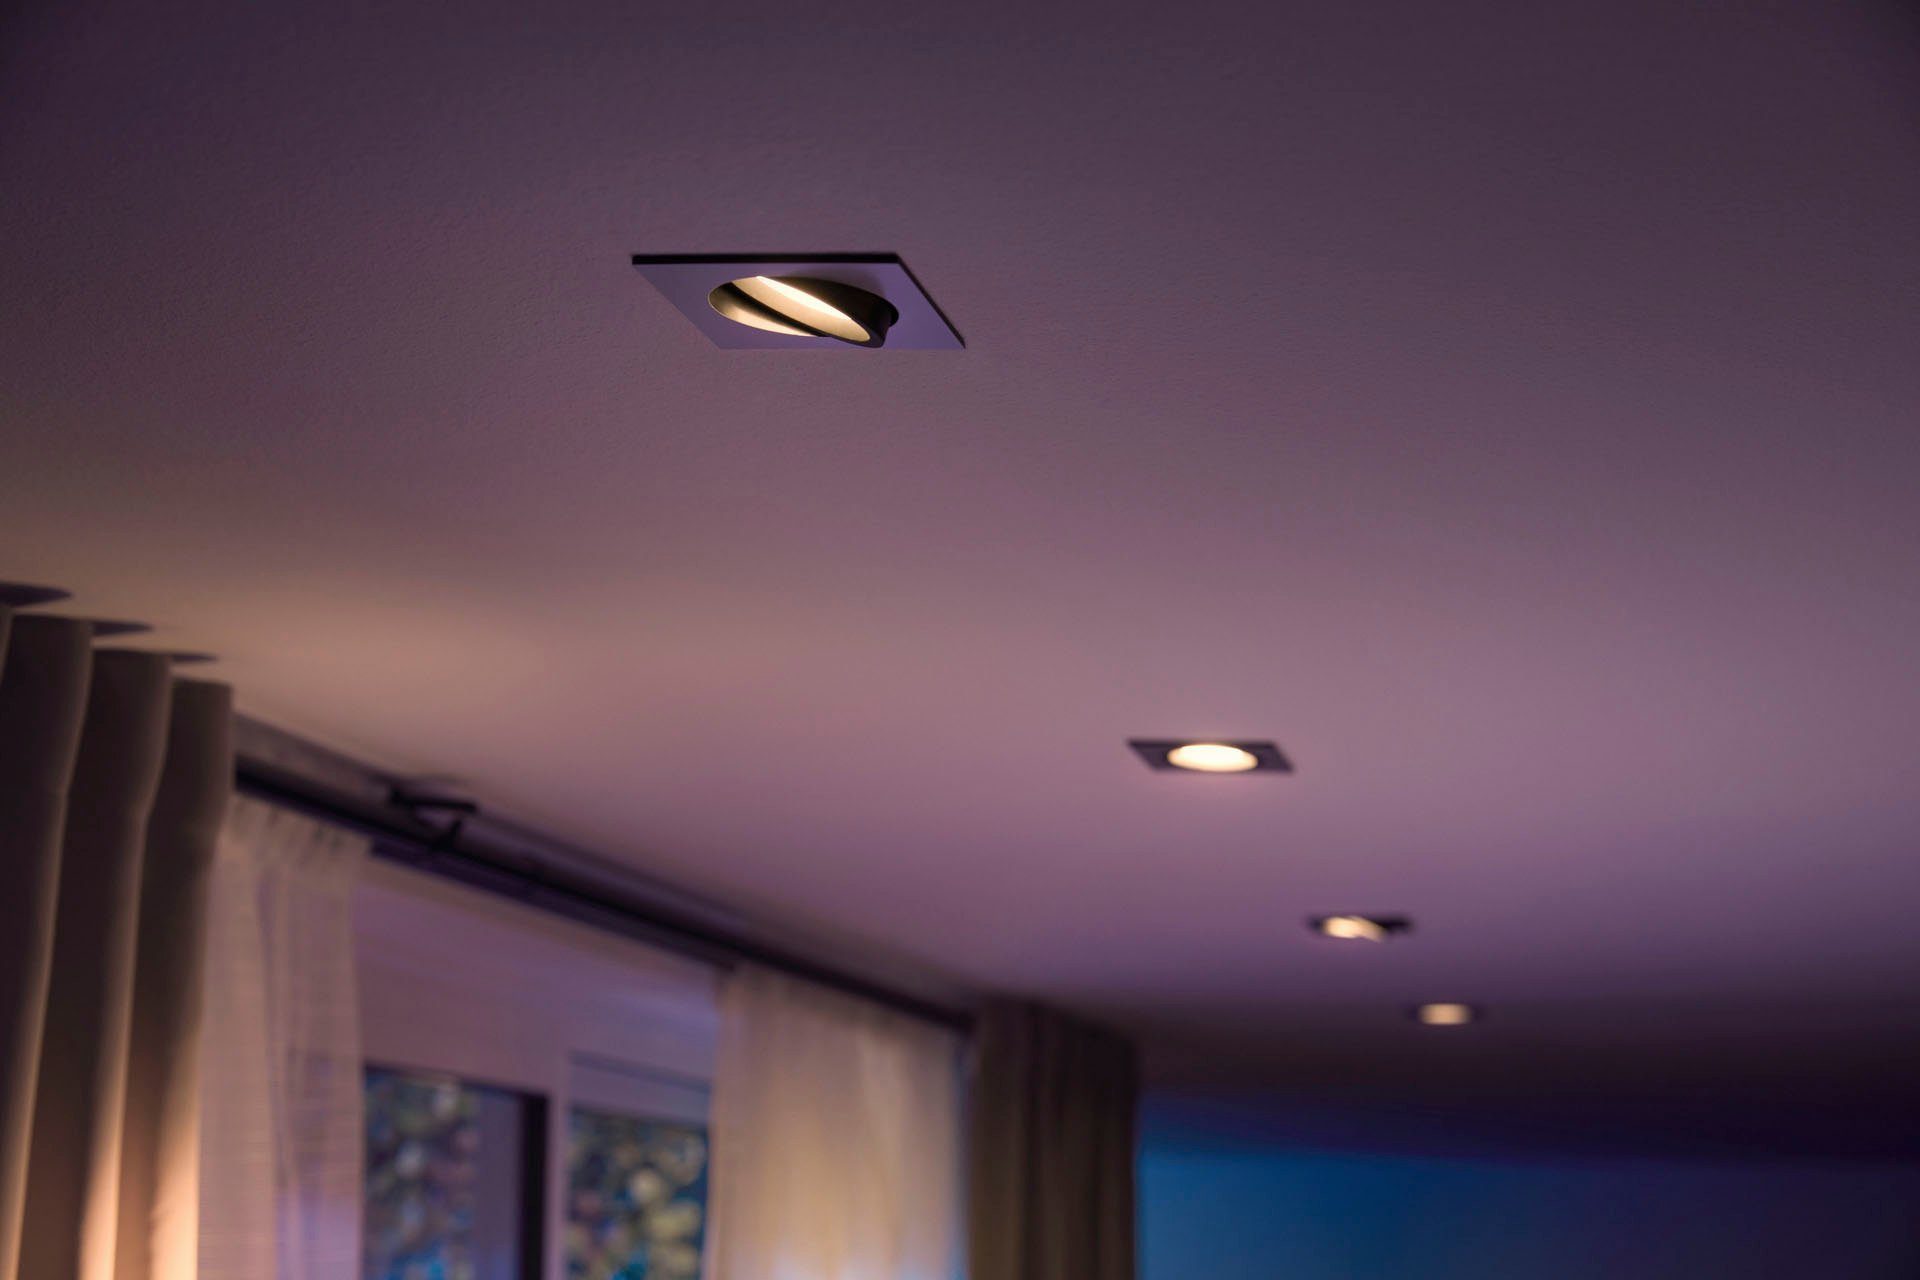 Farbwechsler LED Leuchtmittel Philips Centura, Flutlichtstrahler wechselbar, Dimmfunktion, Hue